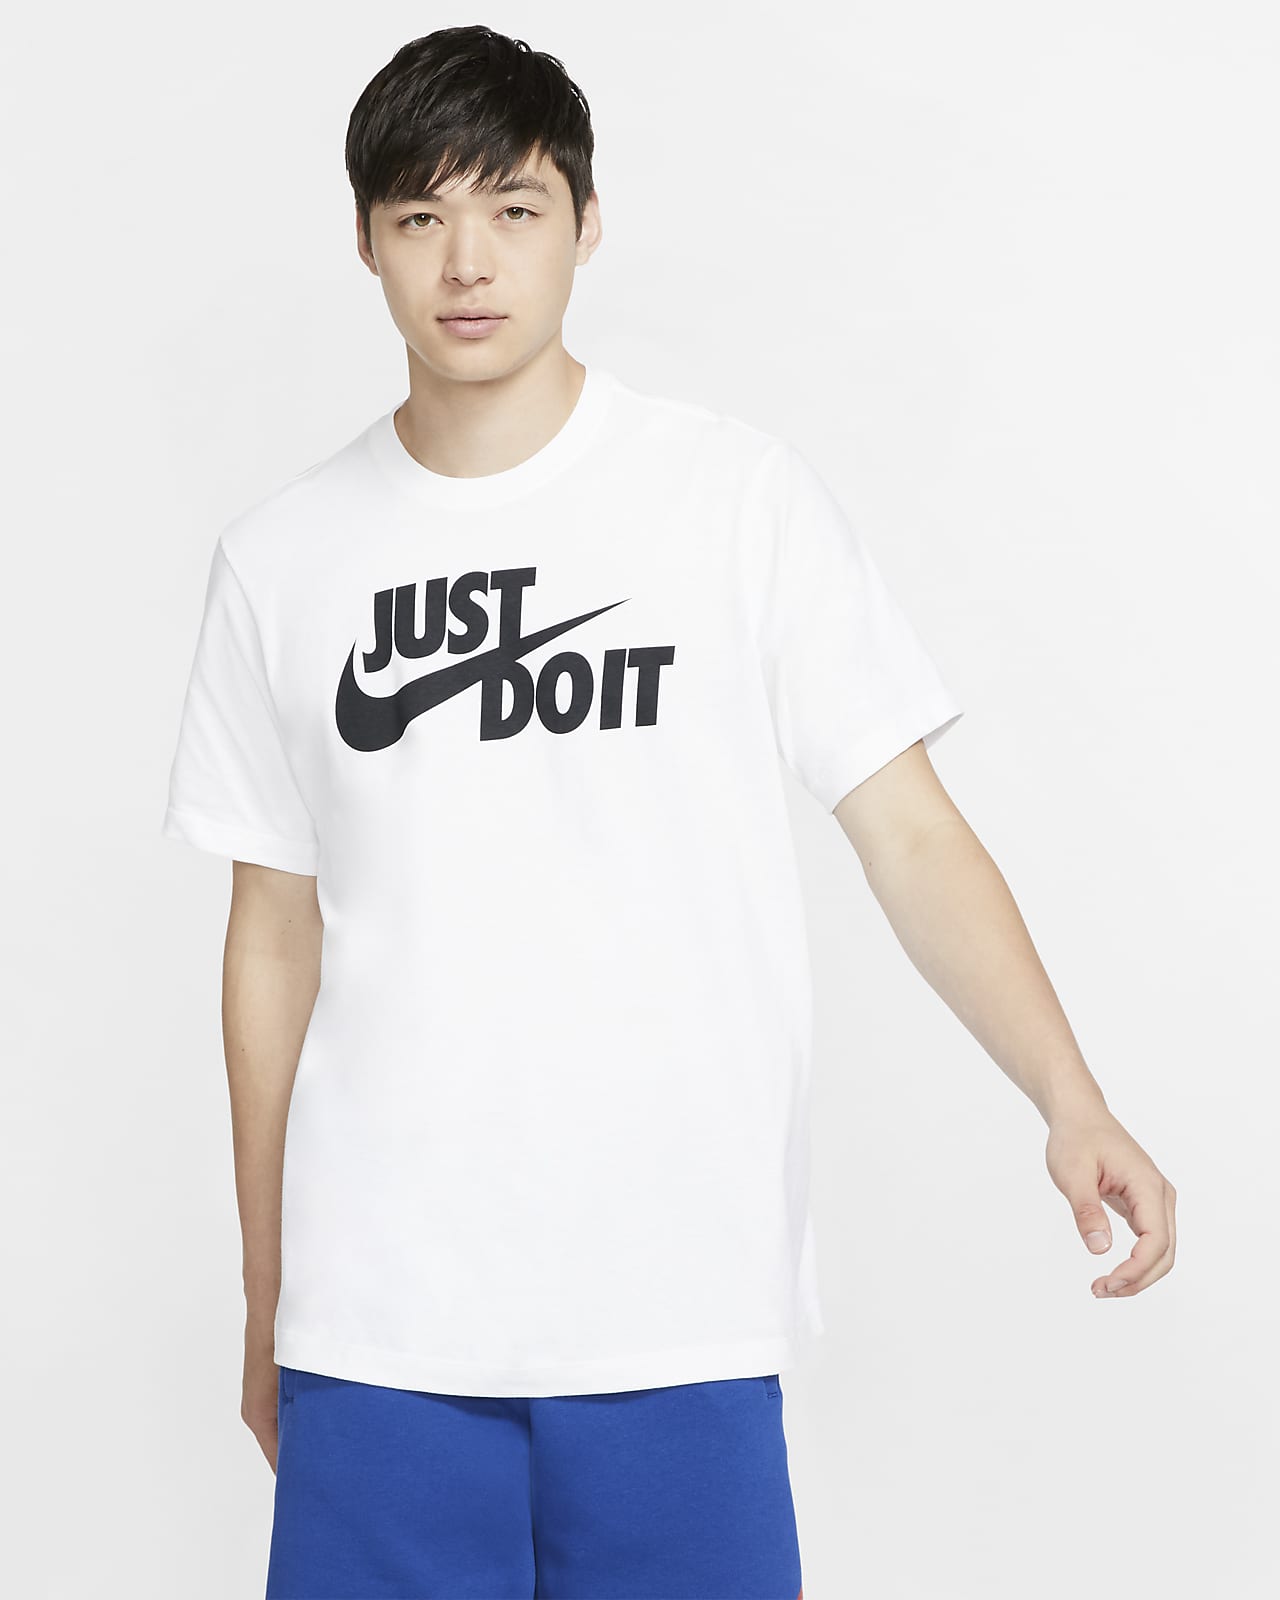 Nike Sportswear JDI 男子T恤